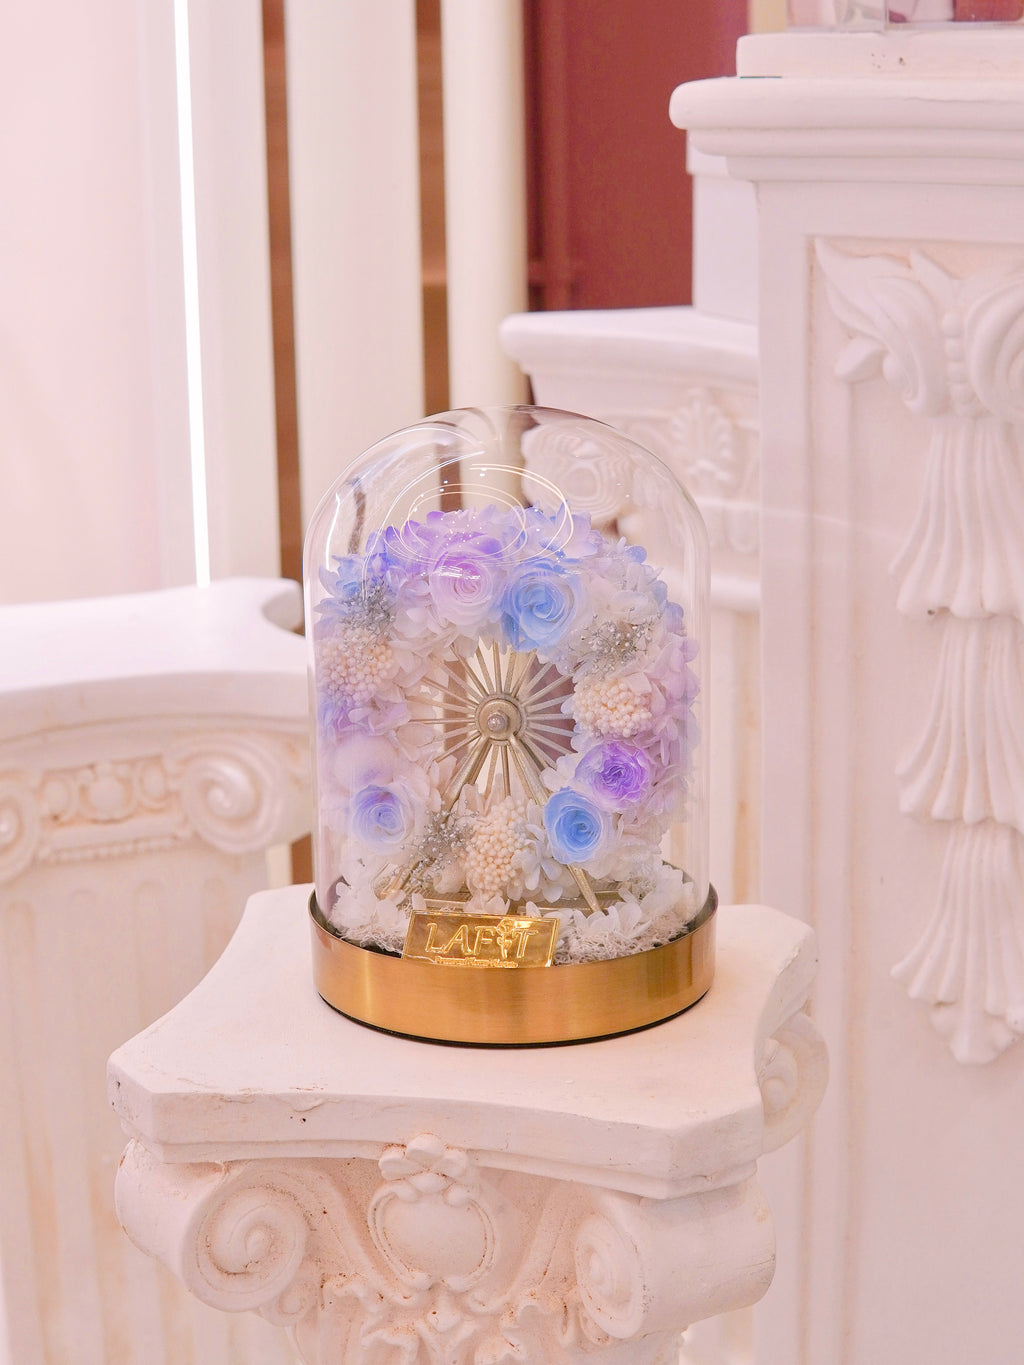 LAFIT 夢幻仙氣永生花藝擺設 · Snowy Fairyland - Lilac Crystal